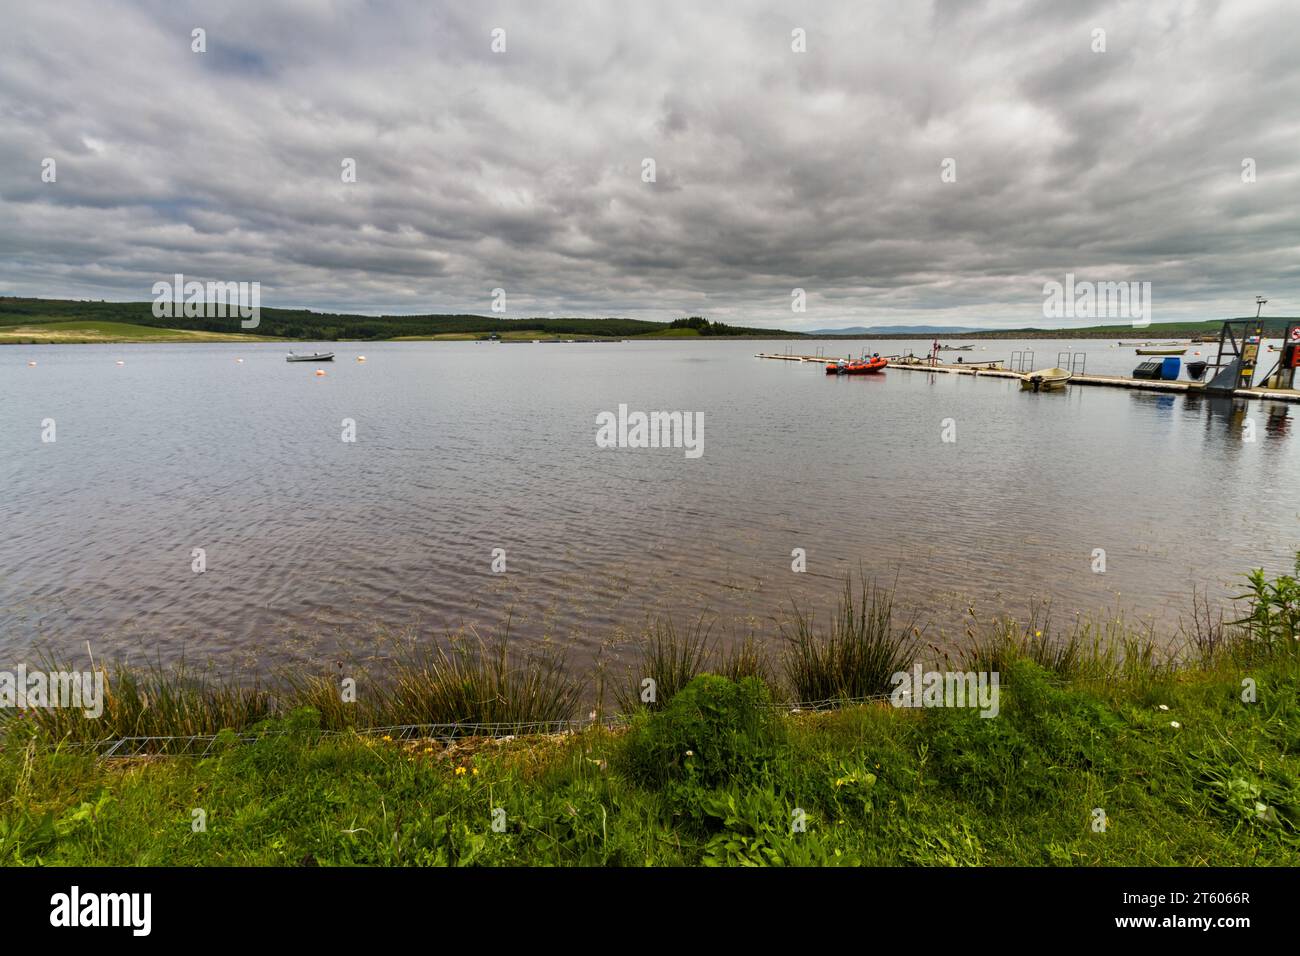 Boote auf See oder Reservoir. Llyn Brenig Visitor Centre, Cerrigydrudion, Conwy, Snowdonia oder Eryri National Park, Nordwales, Großbritannien, Landschaft. Stockfoto